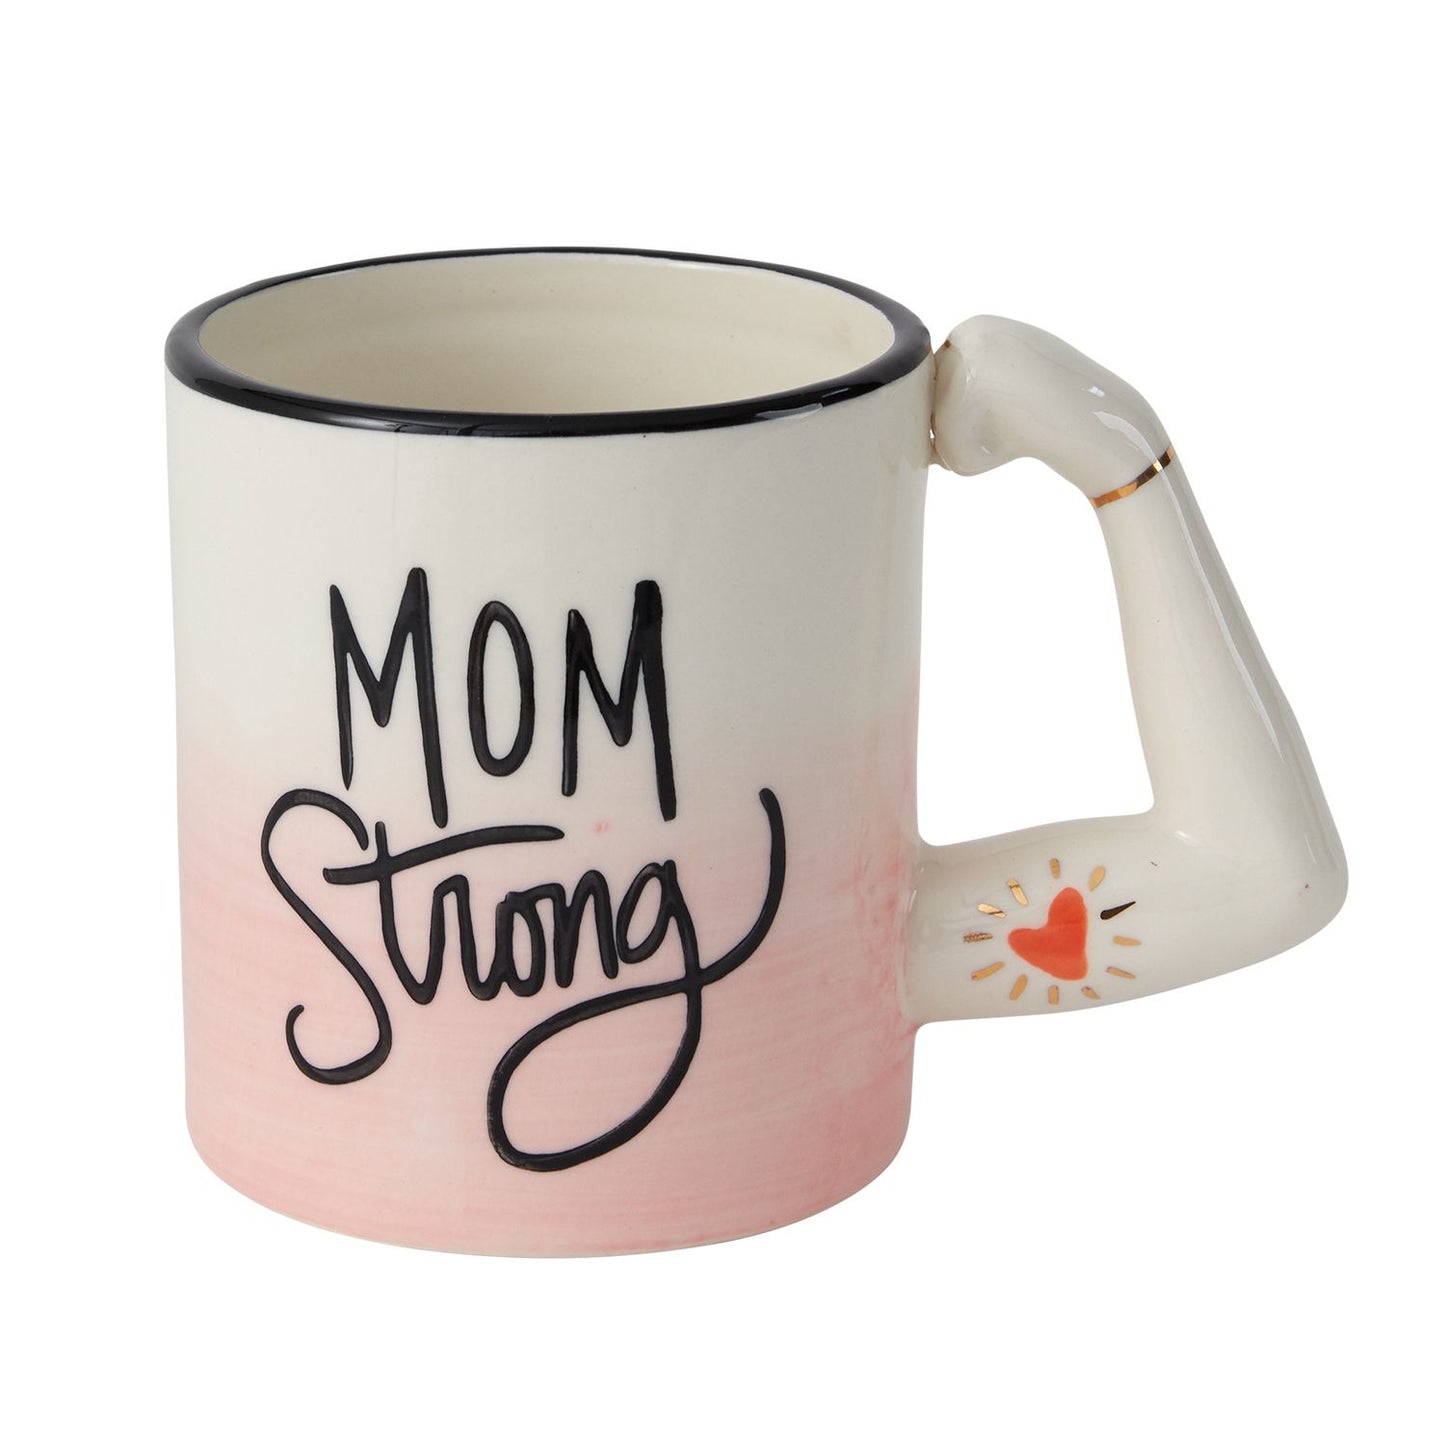 Mom Strong Mug, The Feathered Farmhouse